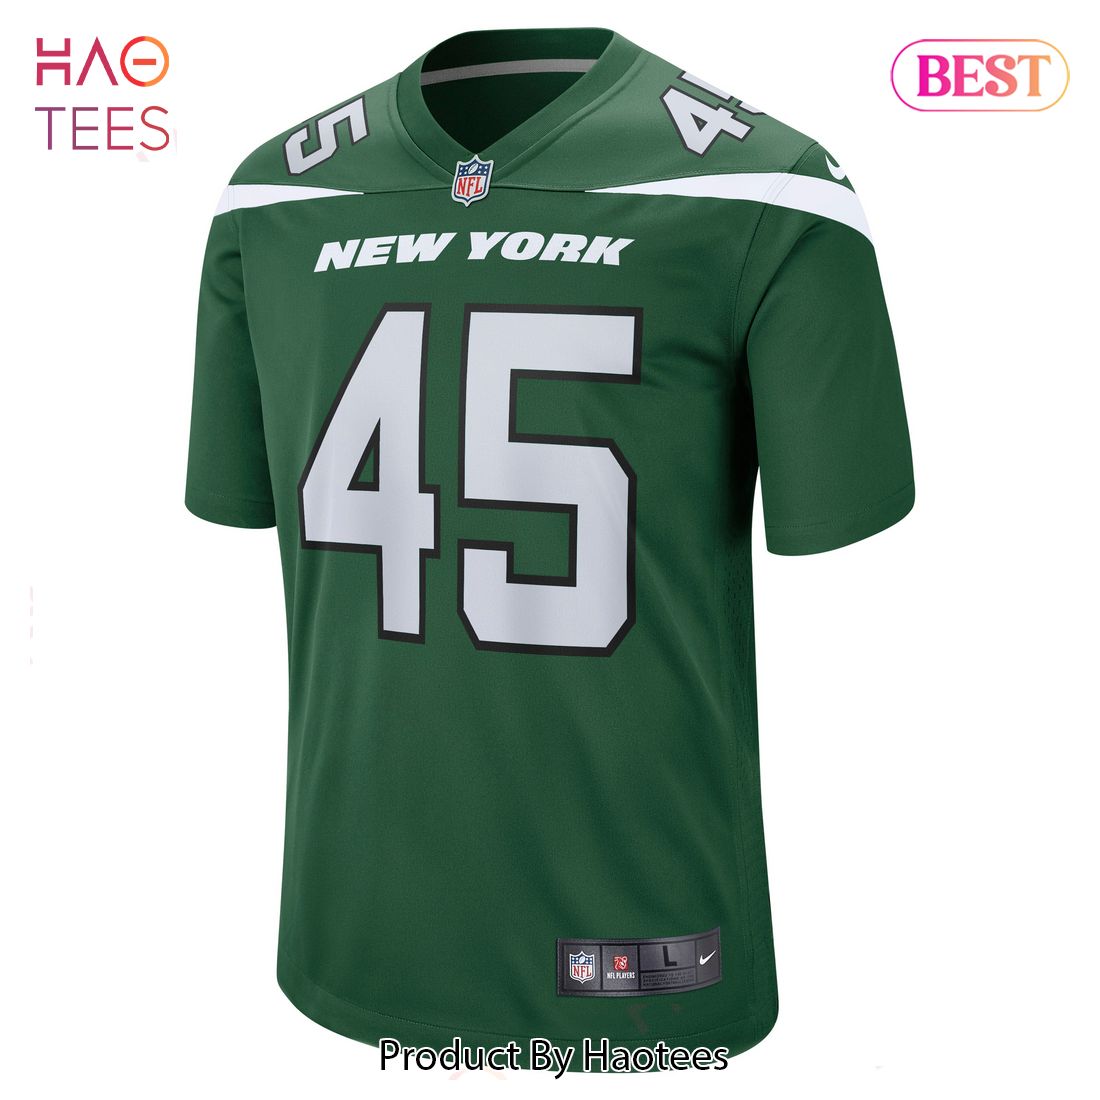 Hamsah Nasirildeen New York Jets Nike Game Jersey Gotham Green